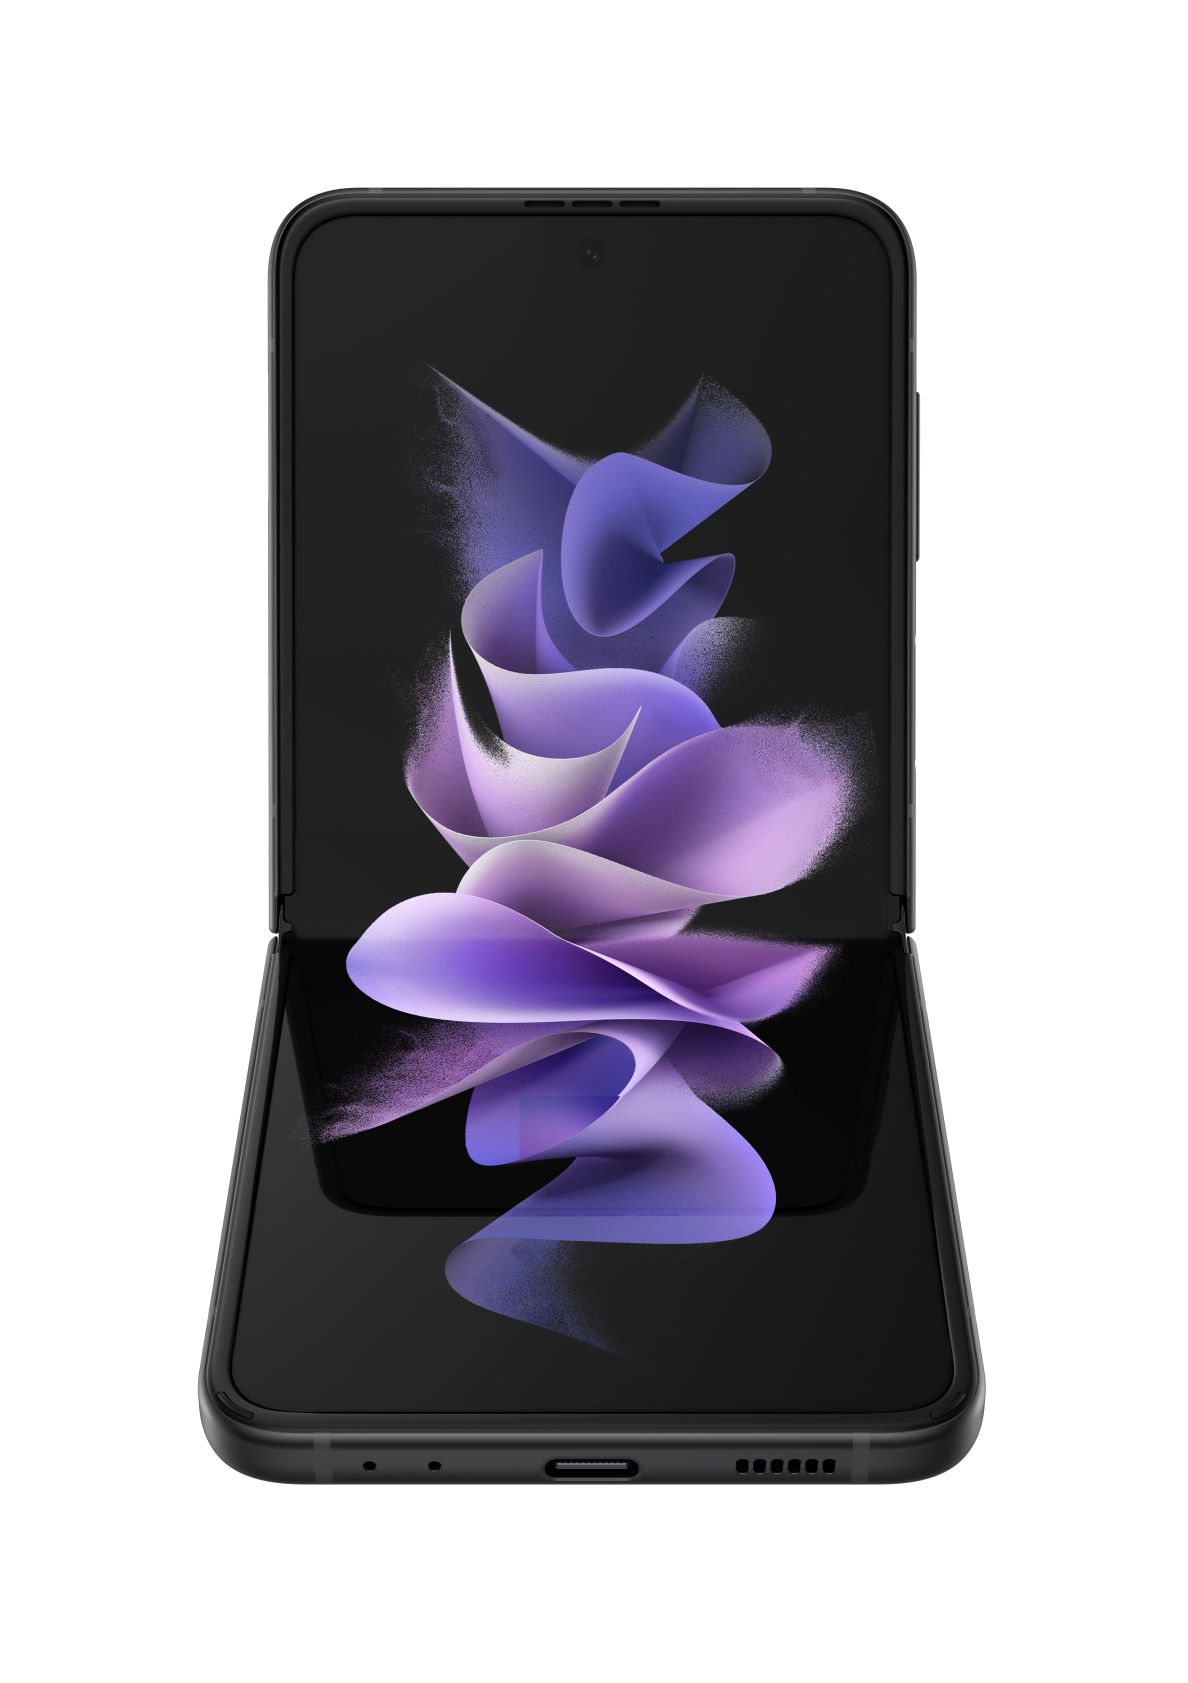 VZ Samsung Galaxy Z Flip3 5G, Black, 128GB - image 2 of 3